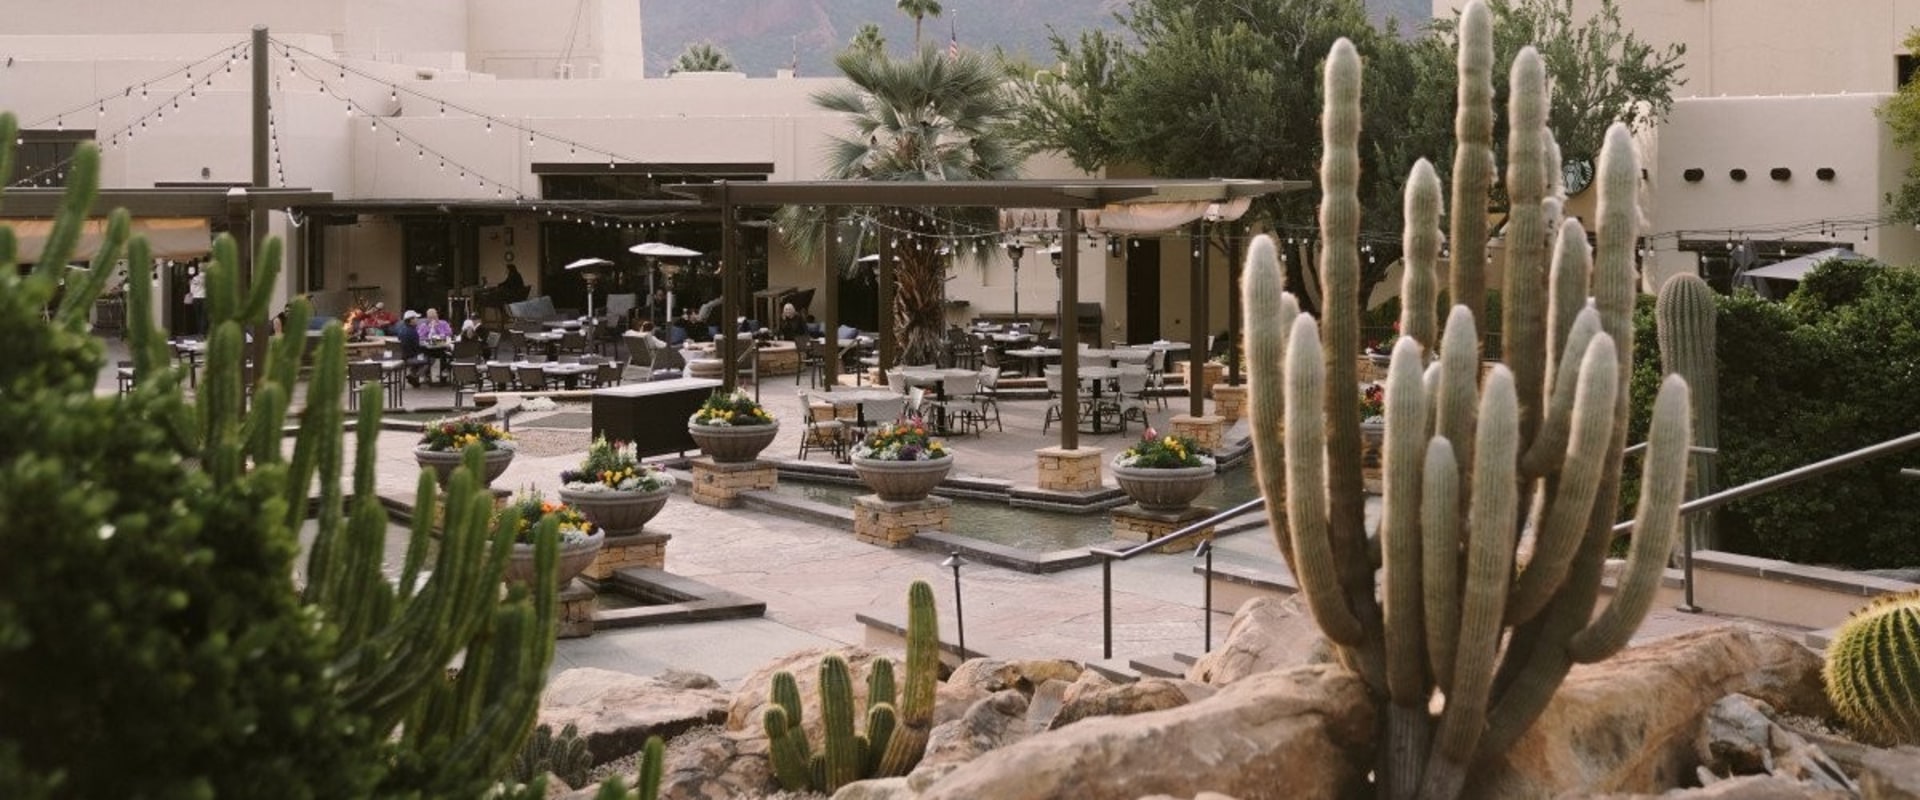 The Best American Cuisine Restaurants in Scottsdale, AZ